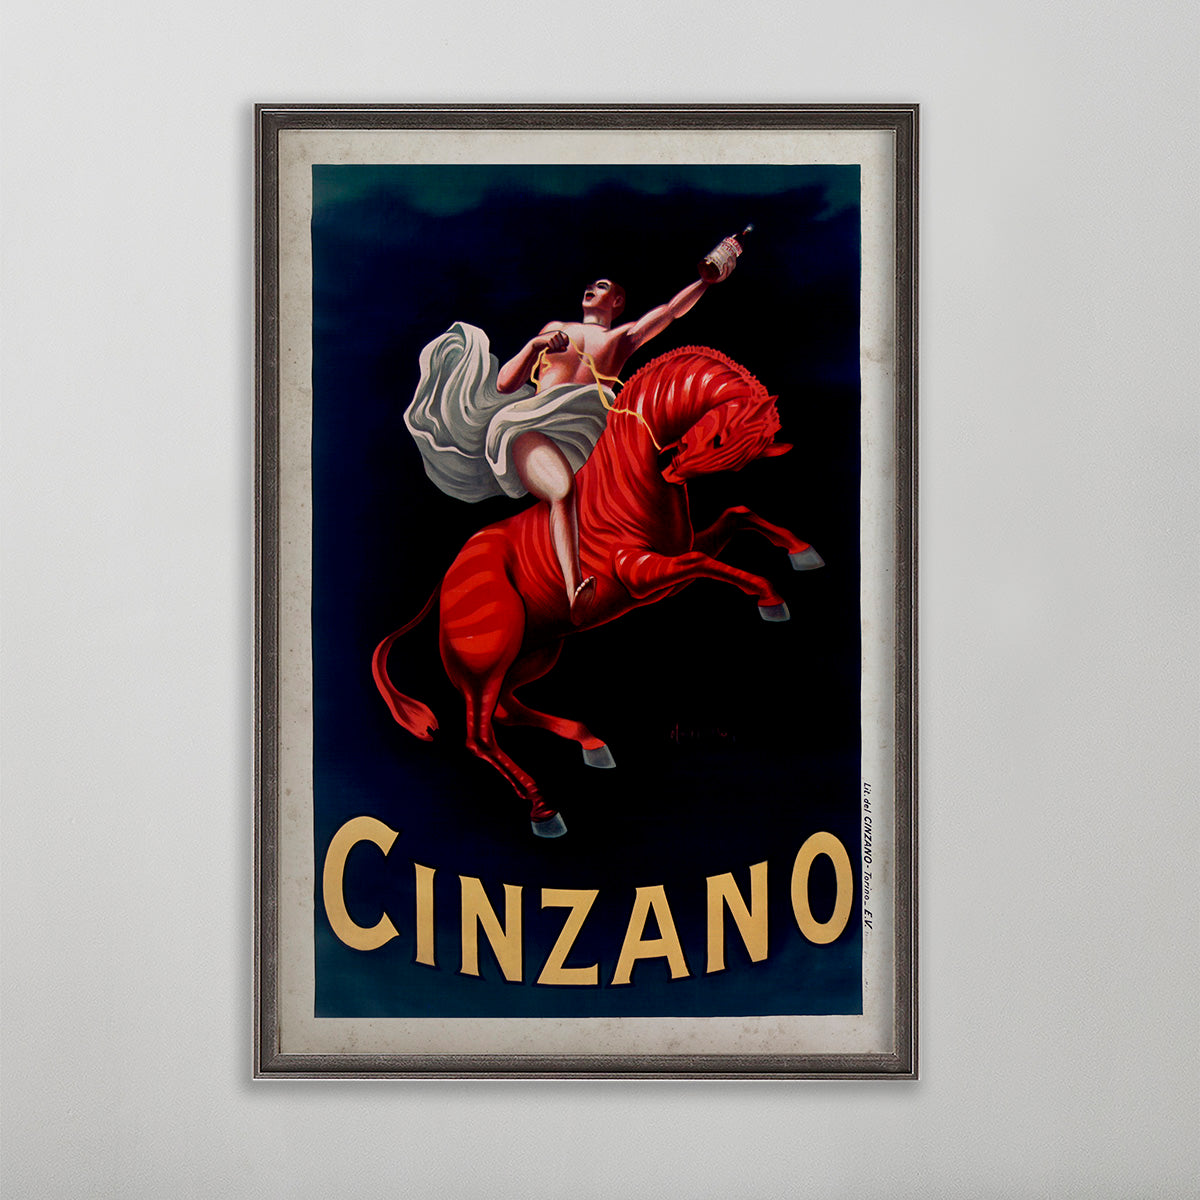 Cinzano Italian vintage poster wall art by leonetto cappiello. Man ride red horse or zebra.